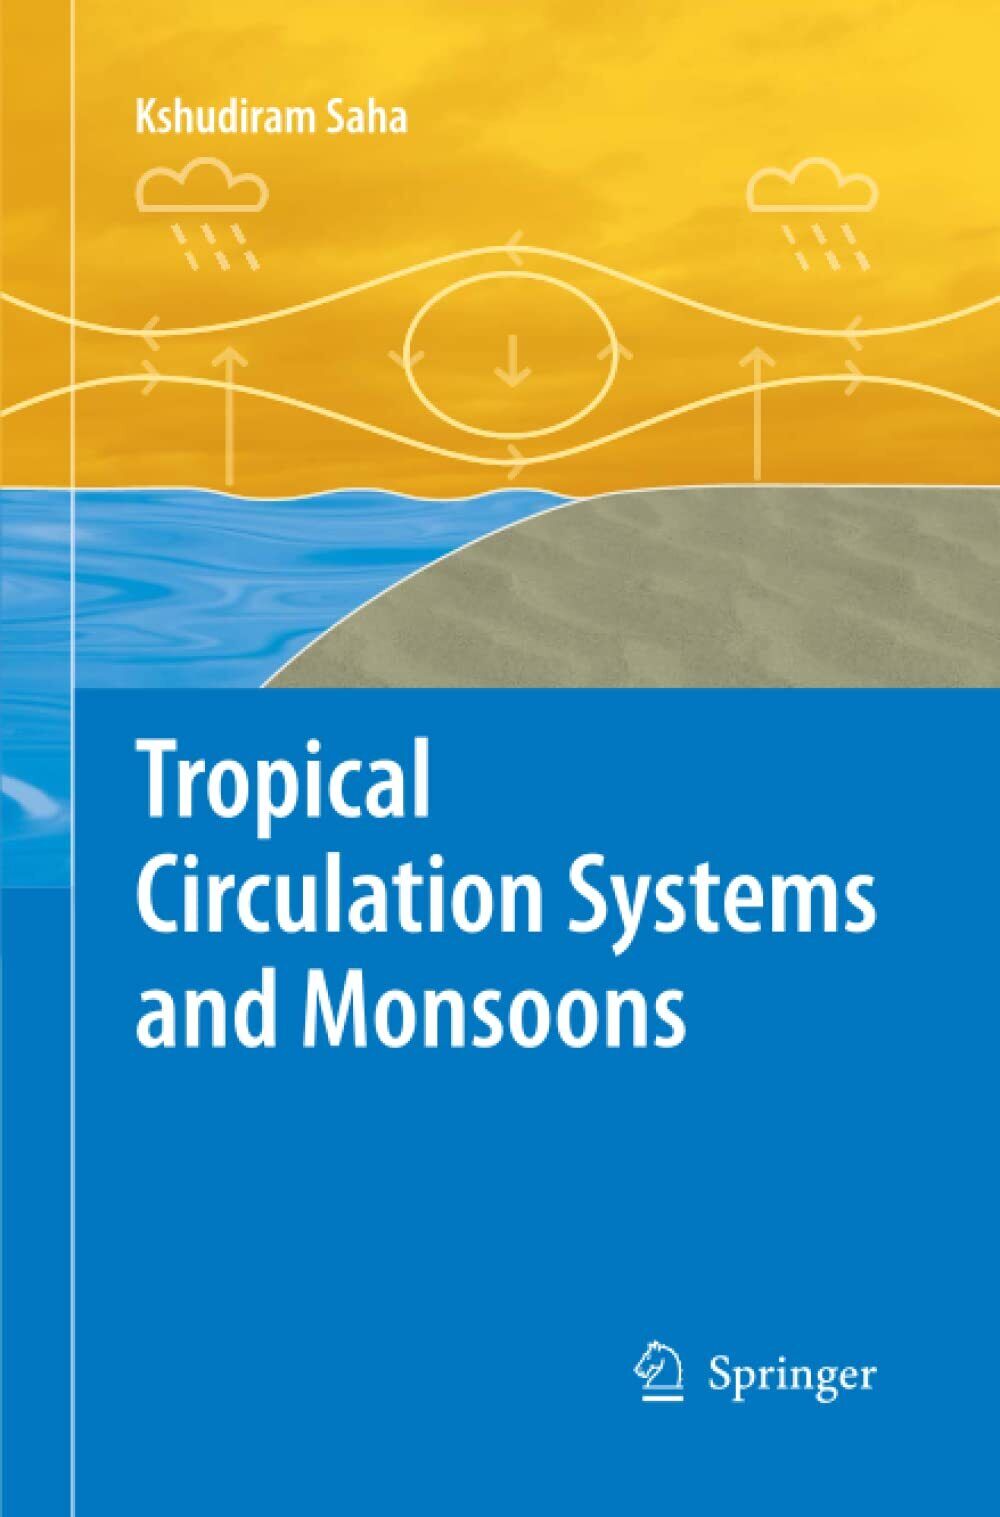 Tropical Circulation Systems and Monsoons - Saha - Springer, 2014 libro usato